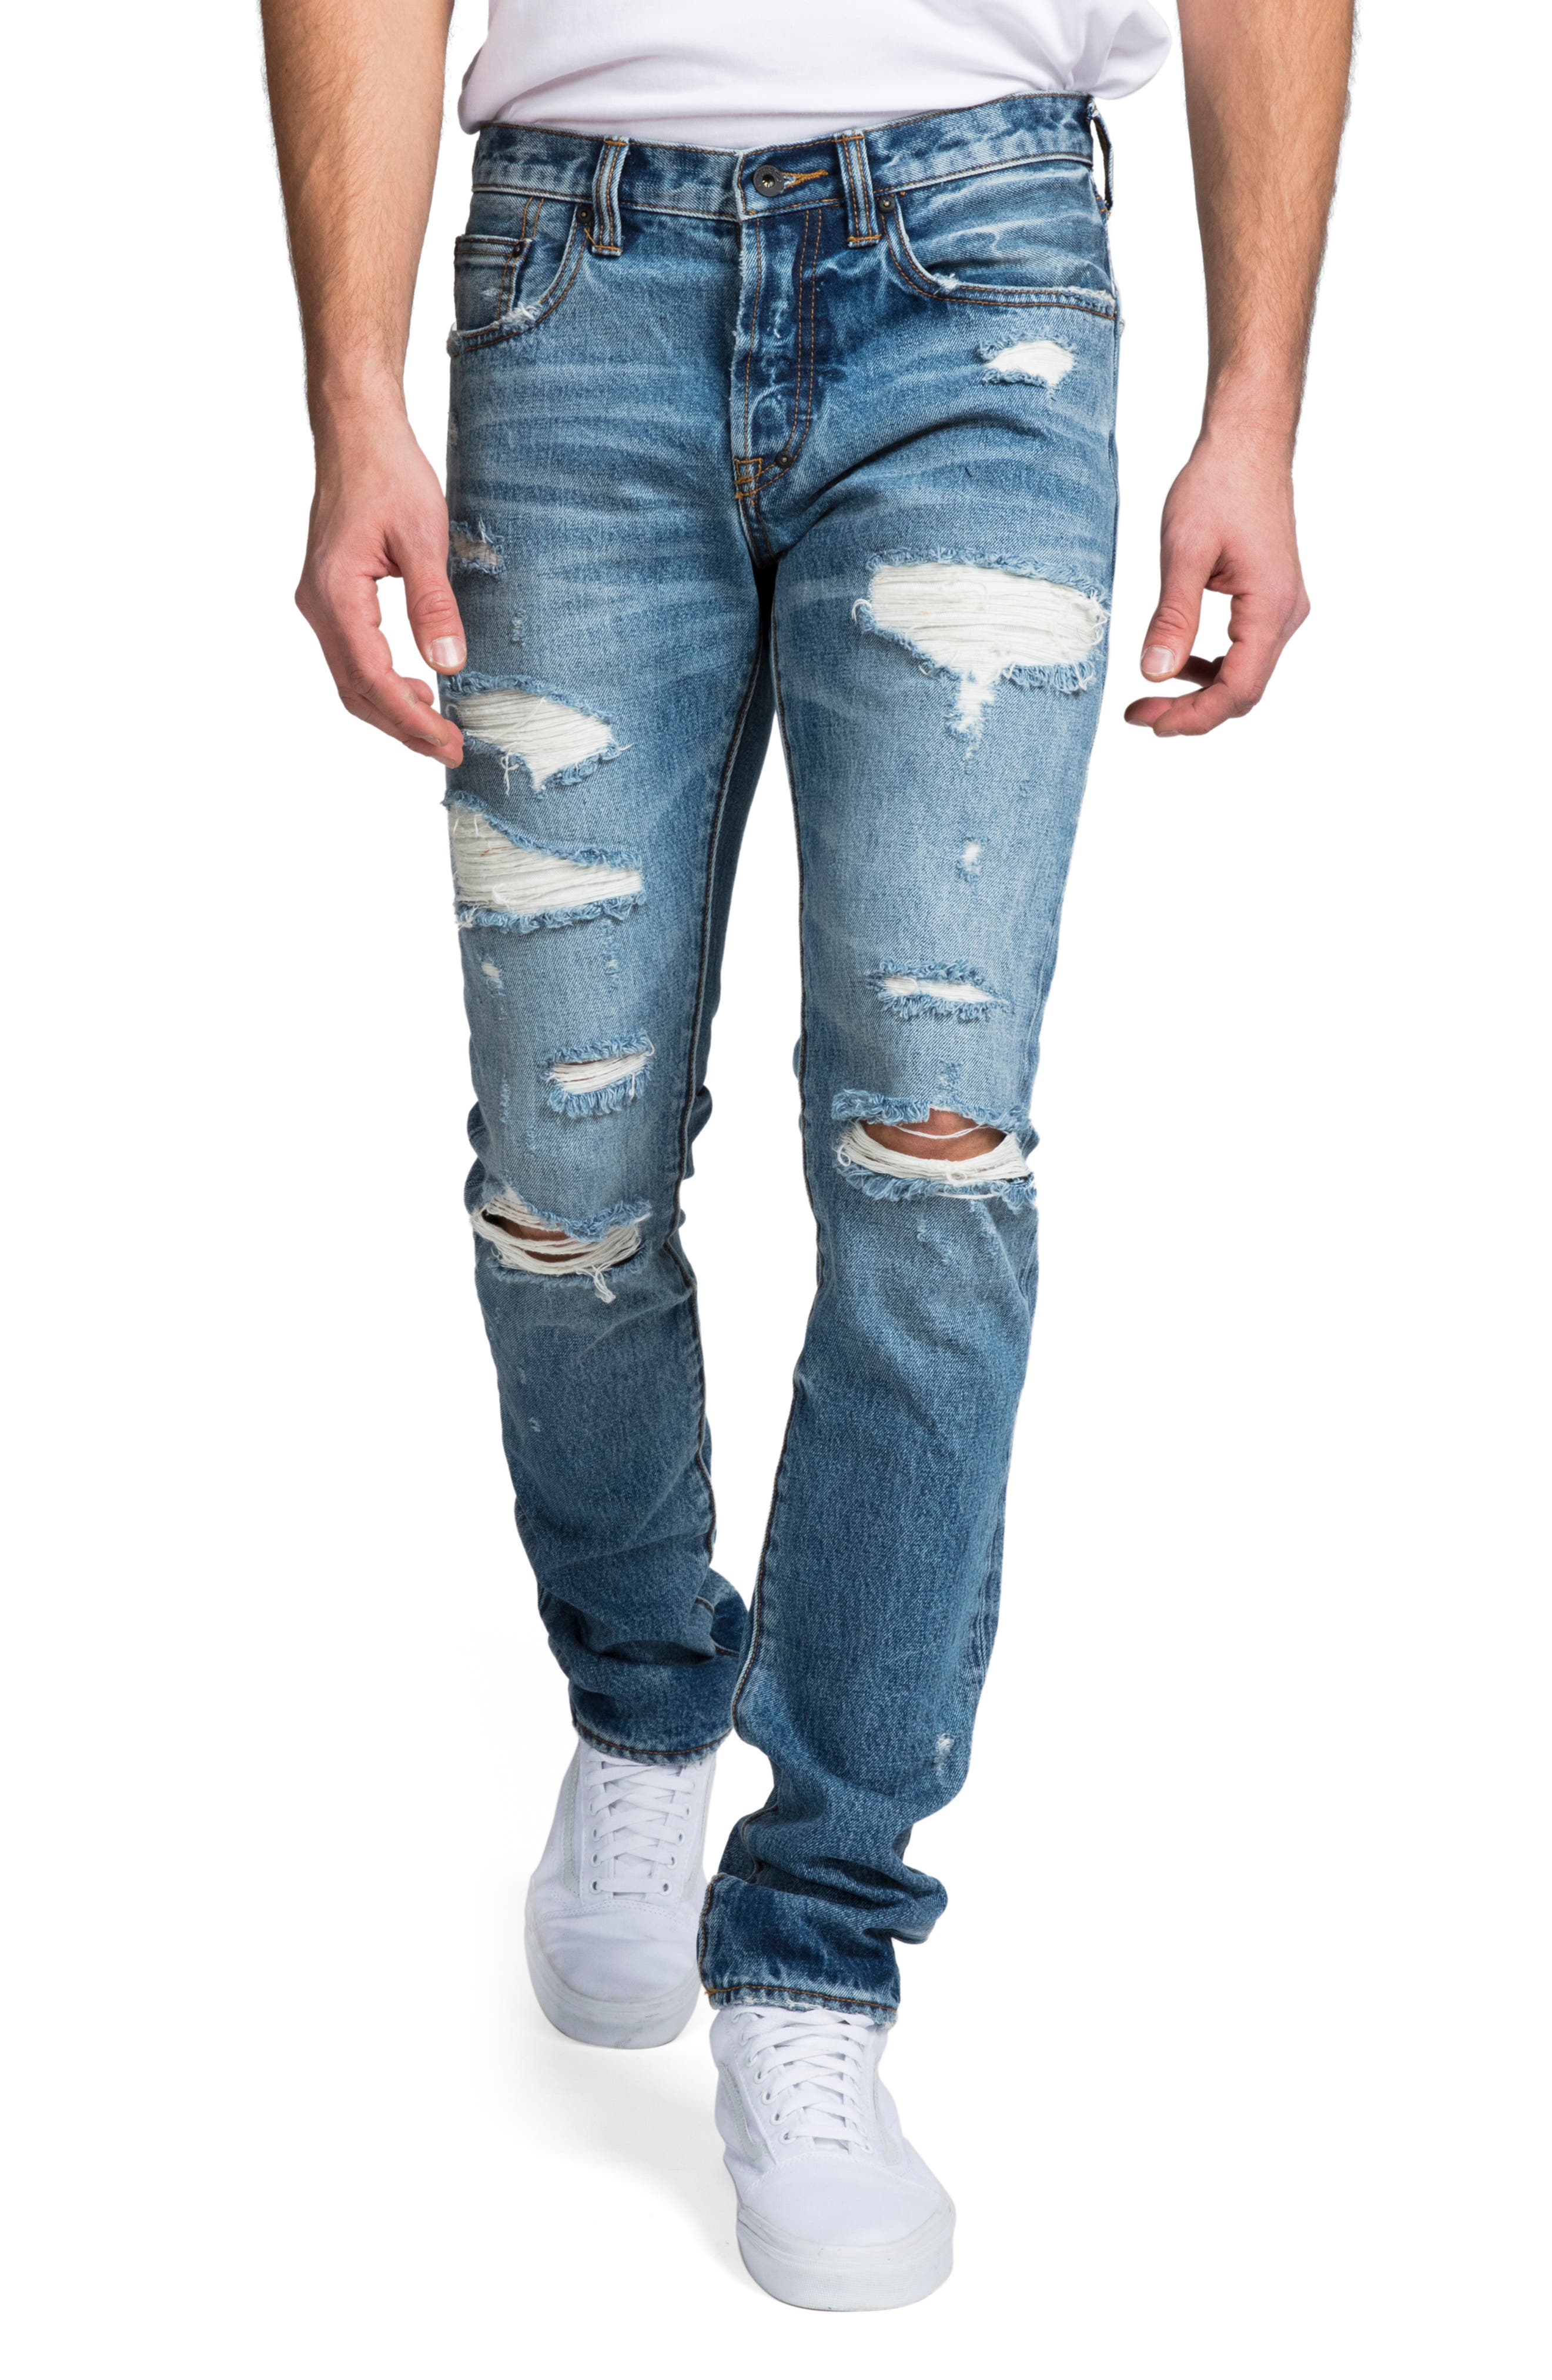 fiorucci jeans